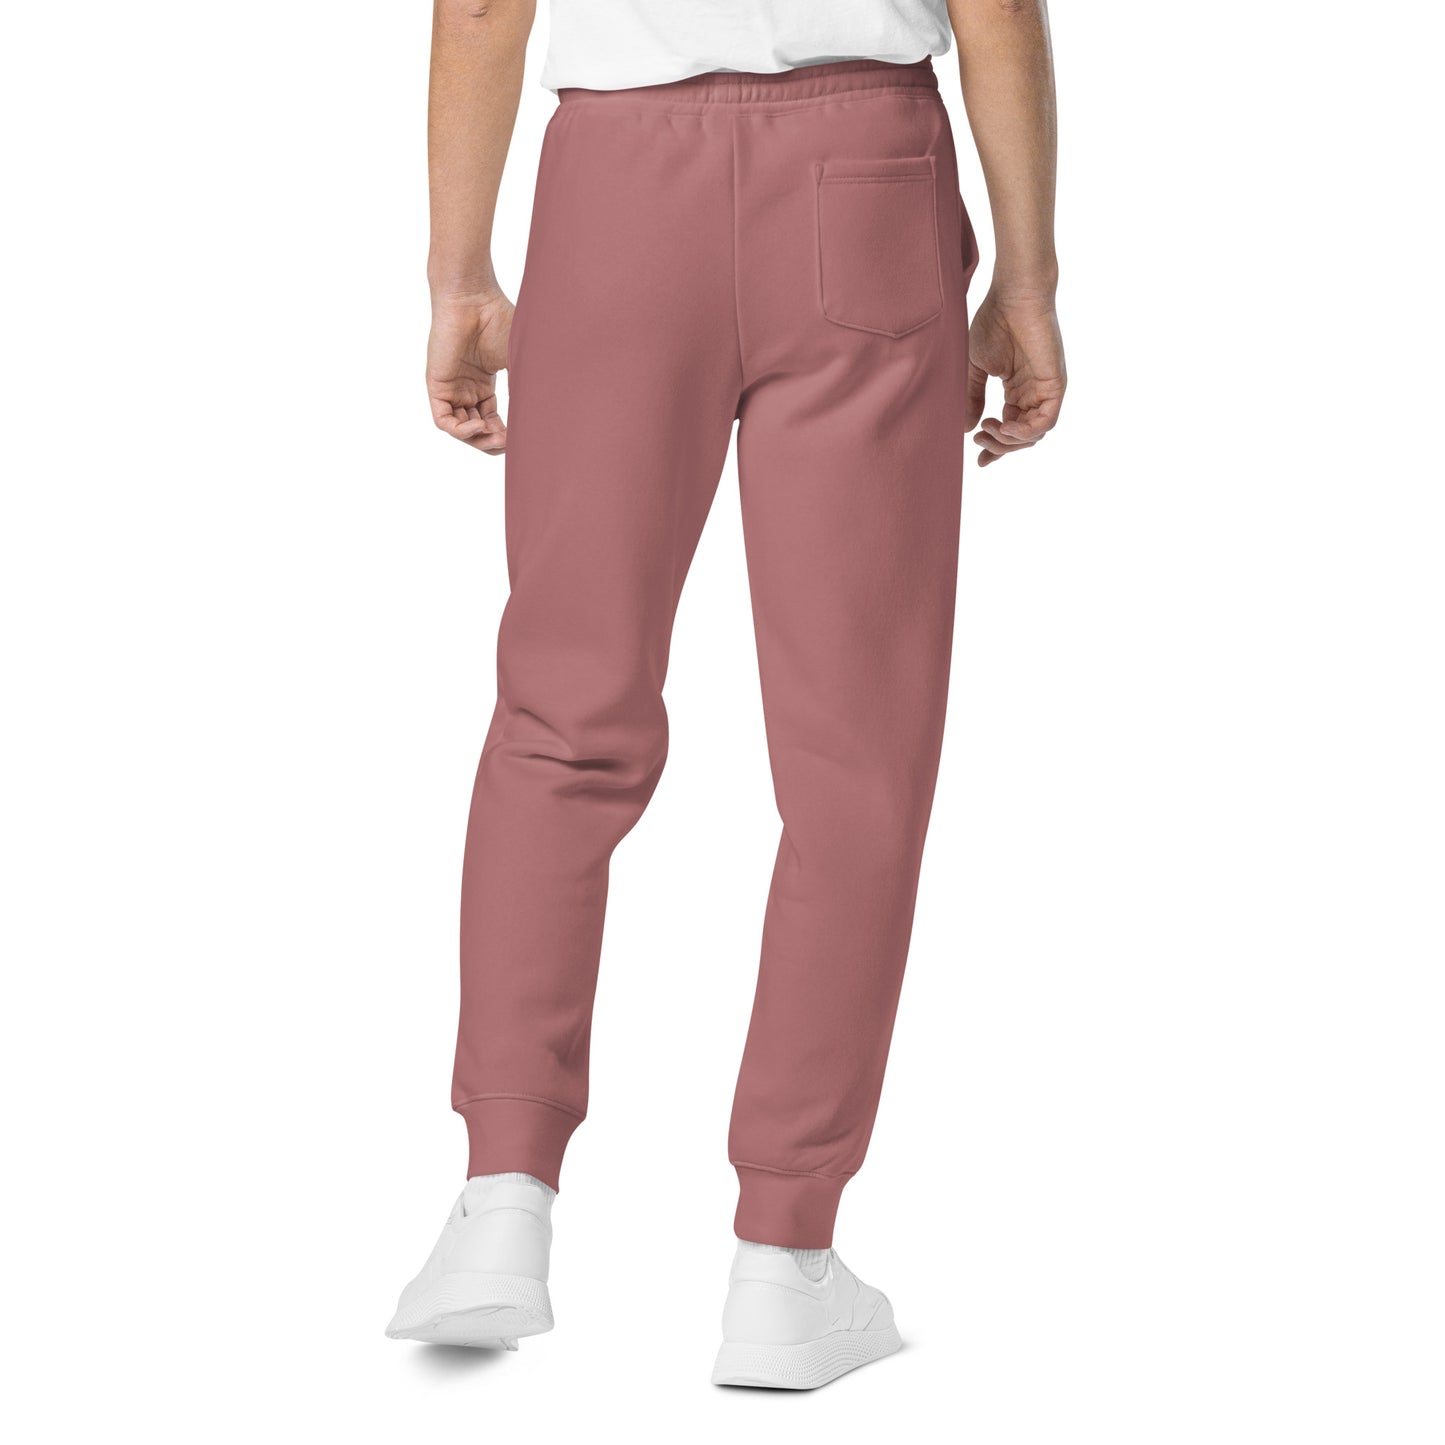 HF Unisex Pigment Dyed Sweatpants